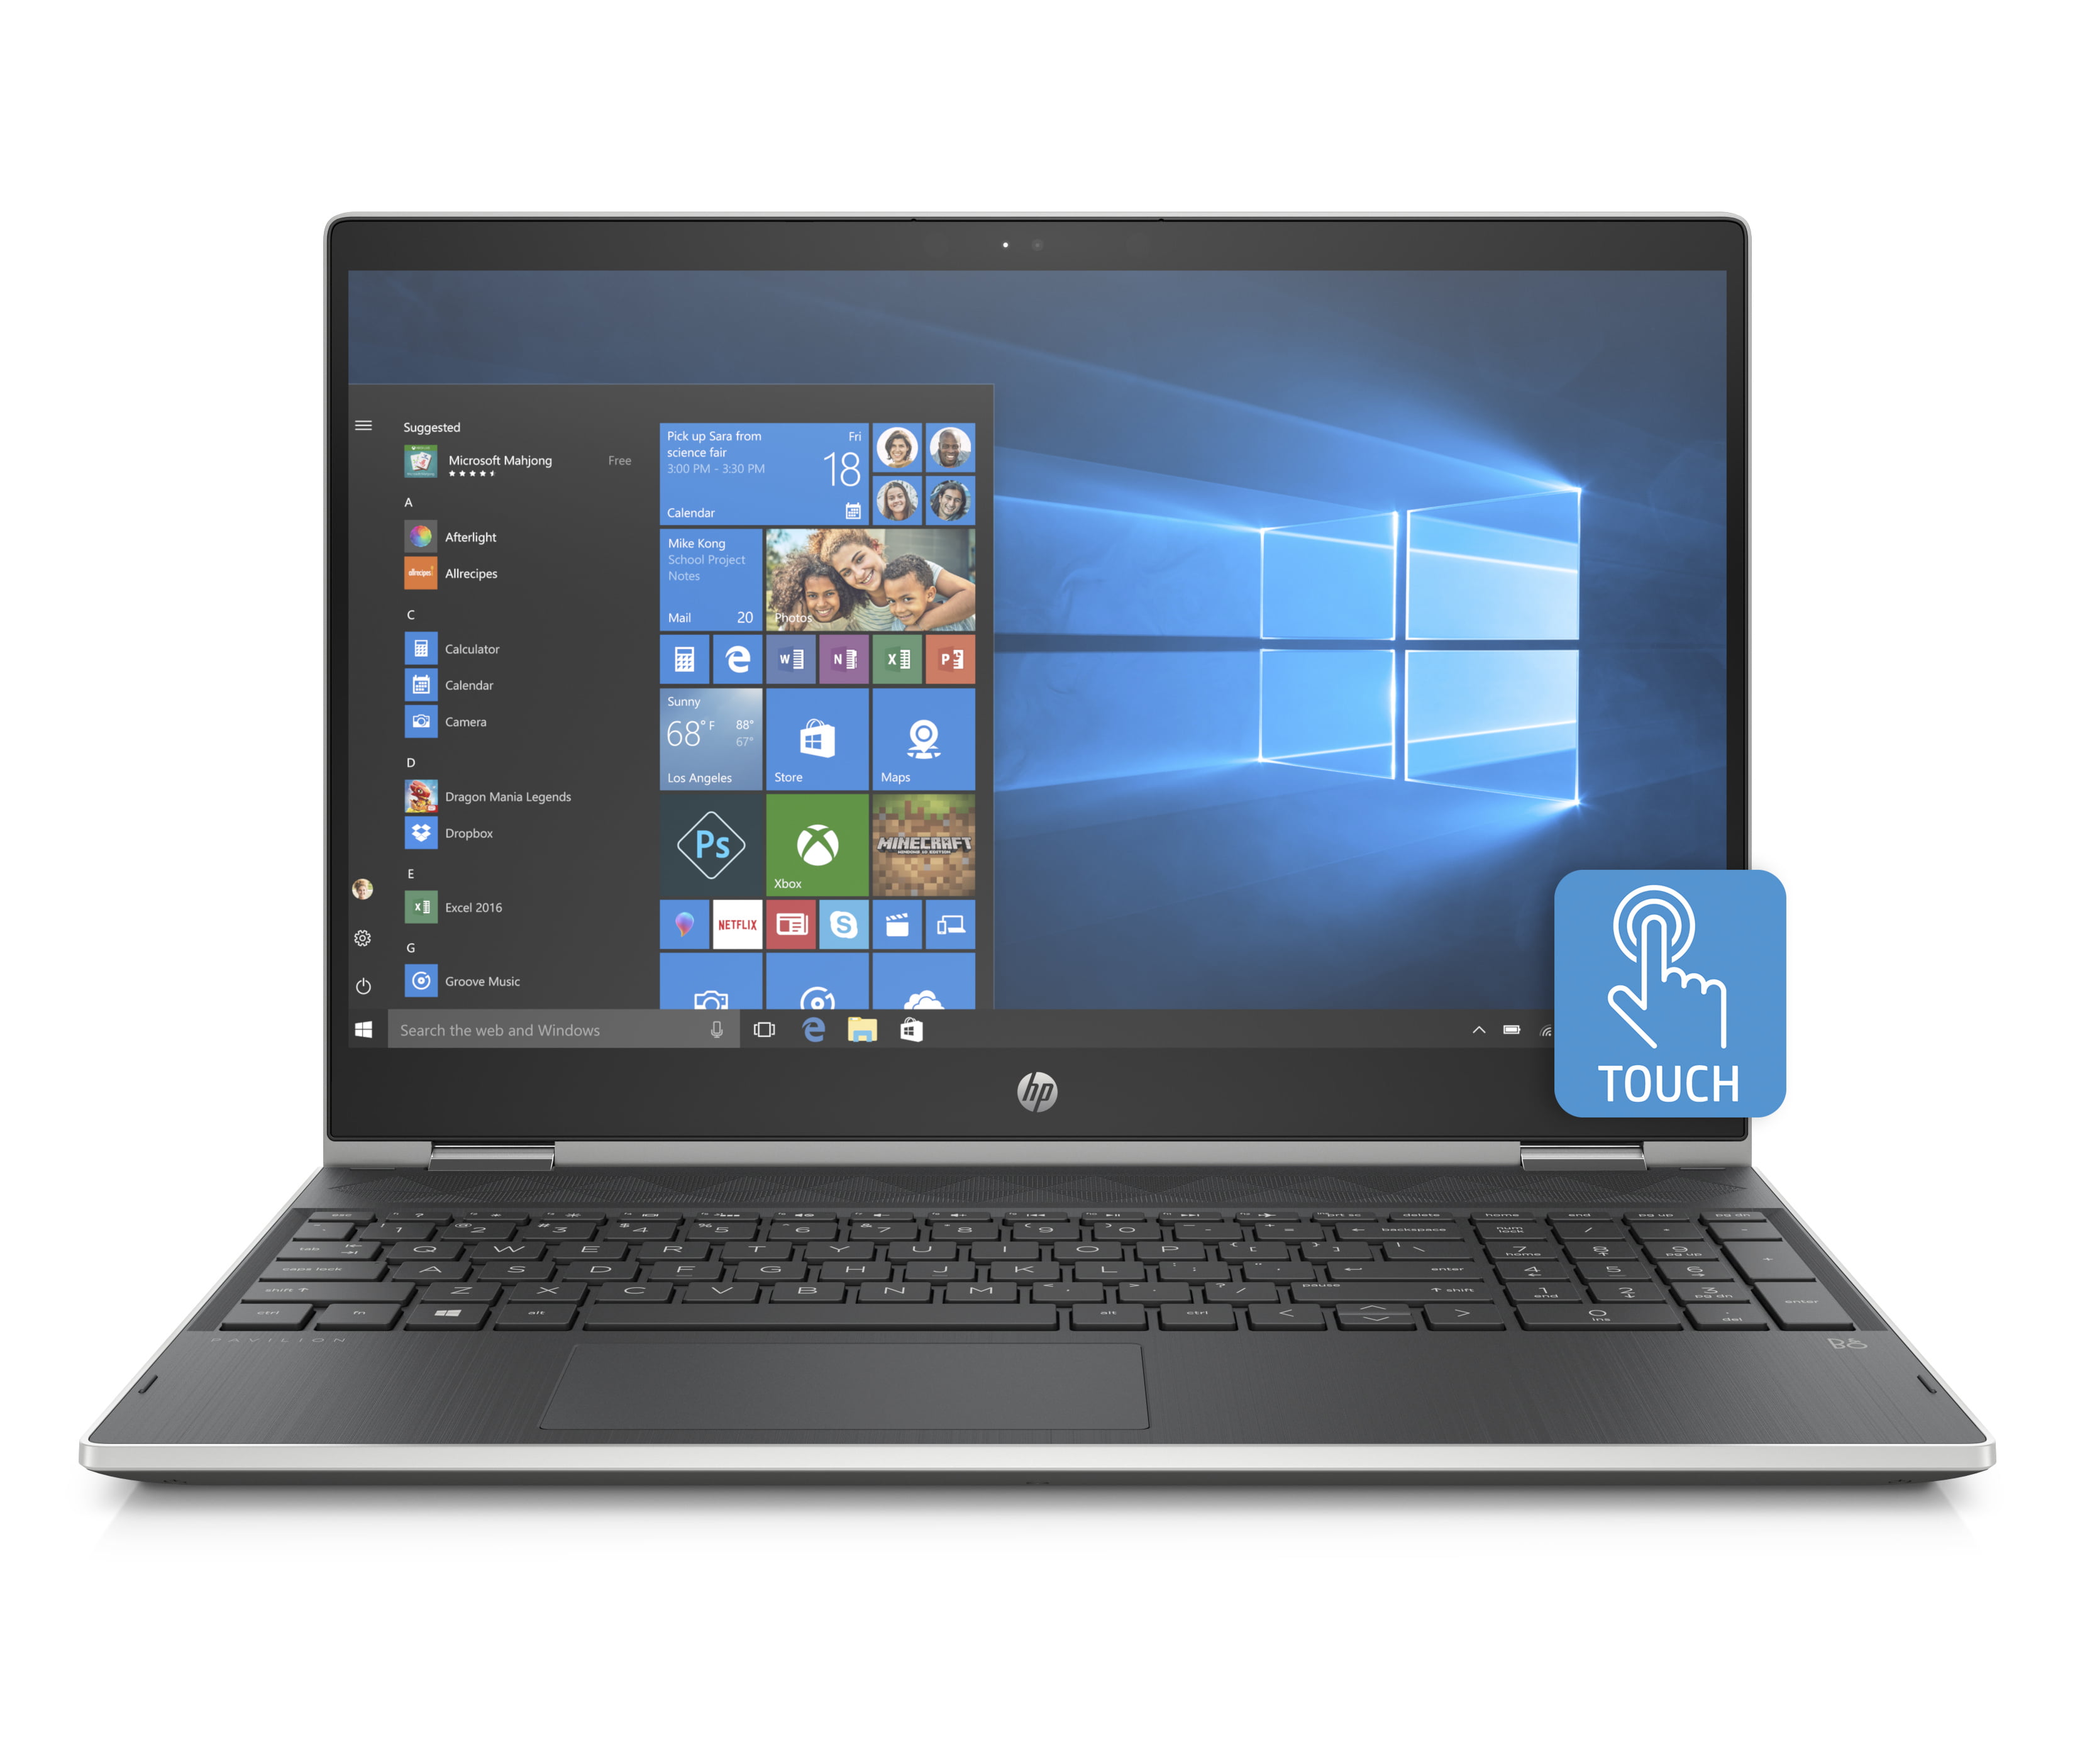 HP Pavilion 15 X360 Convertible Laptop, i5-8250U, 8GB Ram, 1TB HDD